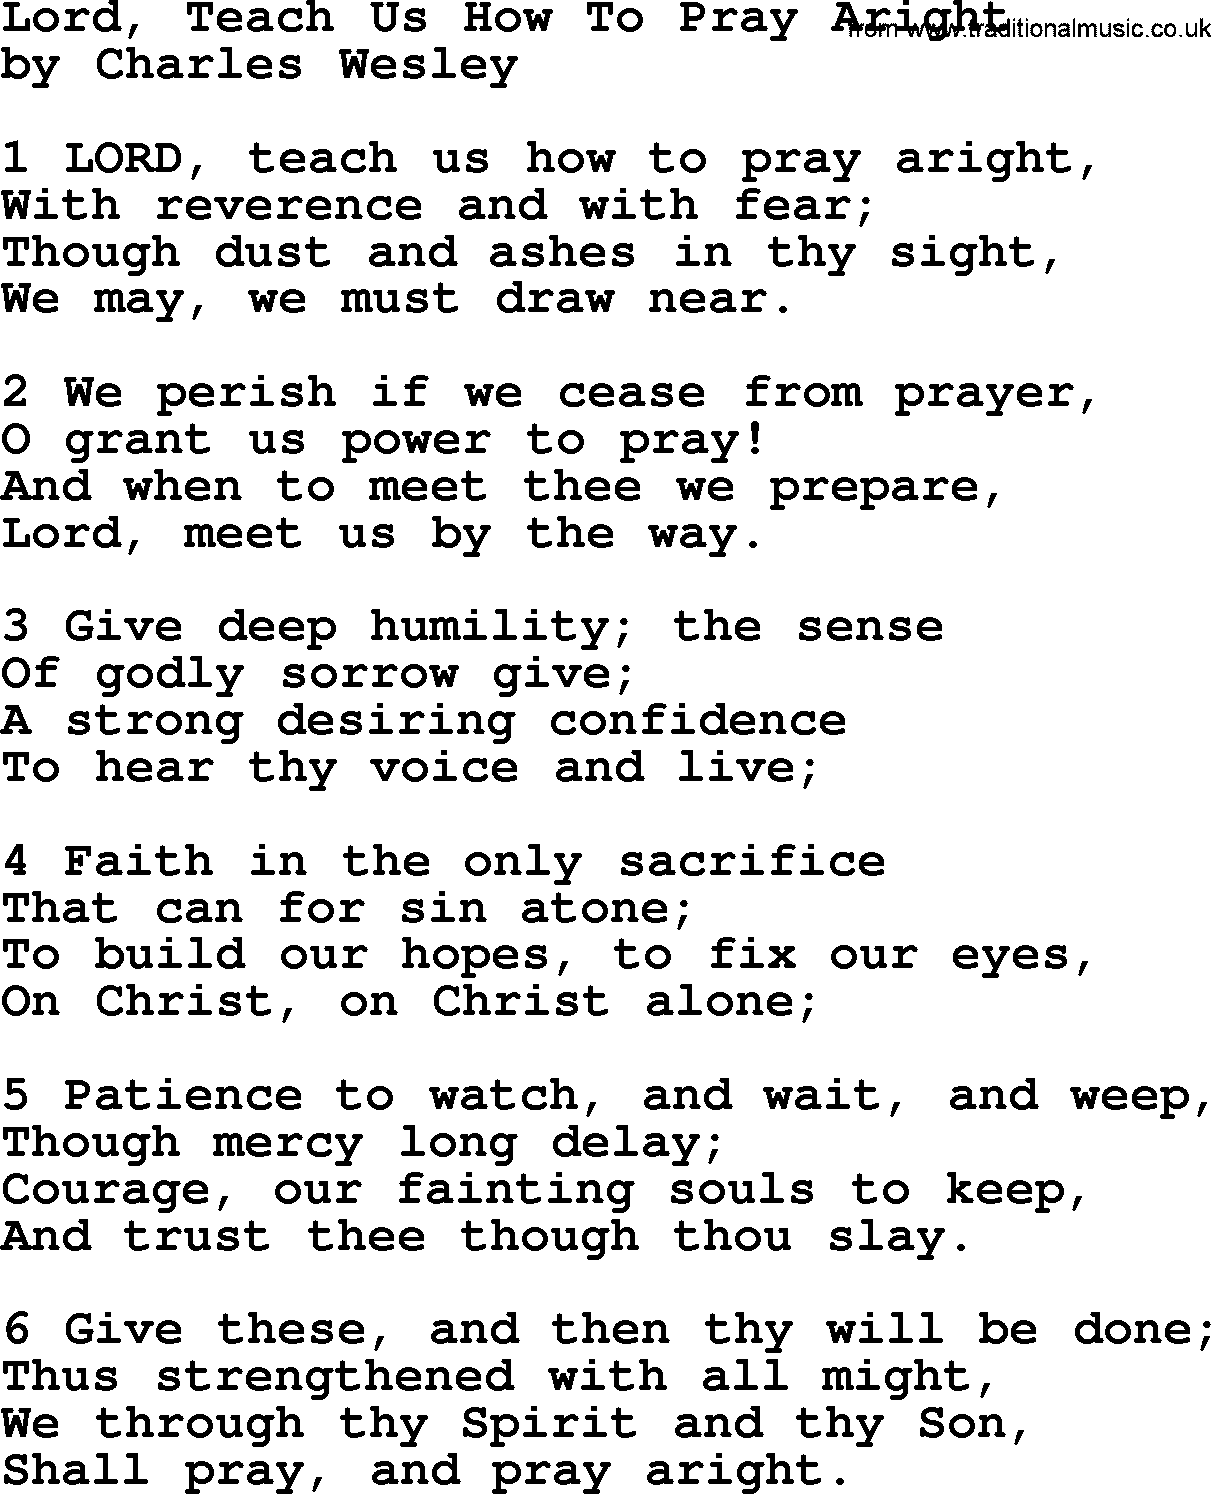 Charles Wesley hymn: Lord, Teach Us How To Pray Aright, lyrics